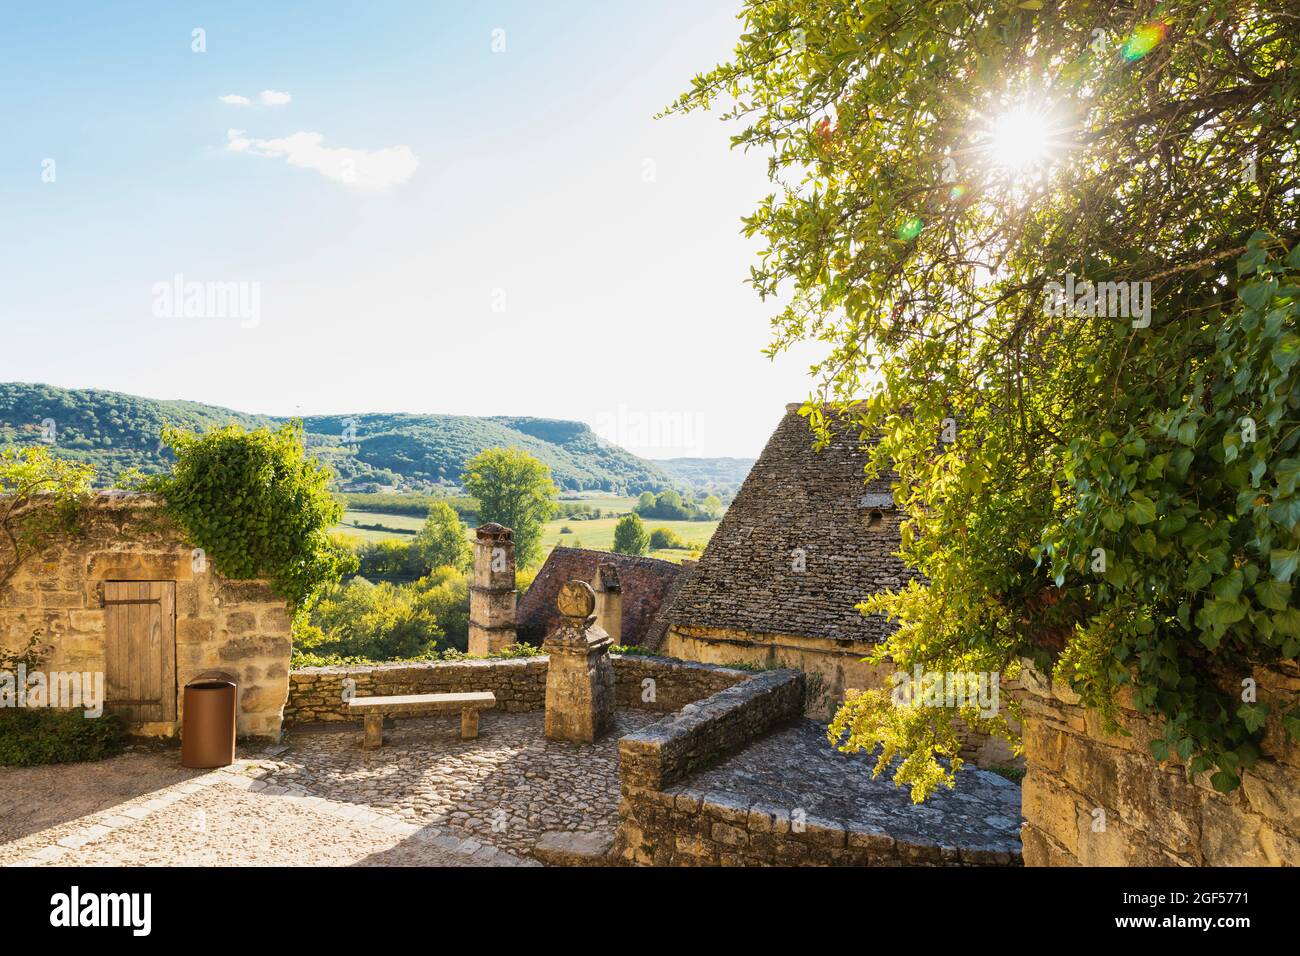 France, Dordogne, Beynac-et-Cazenac, Sun shining over stone architecture of medieval village Stock Photo